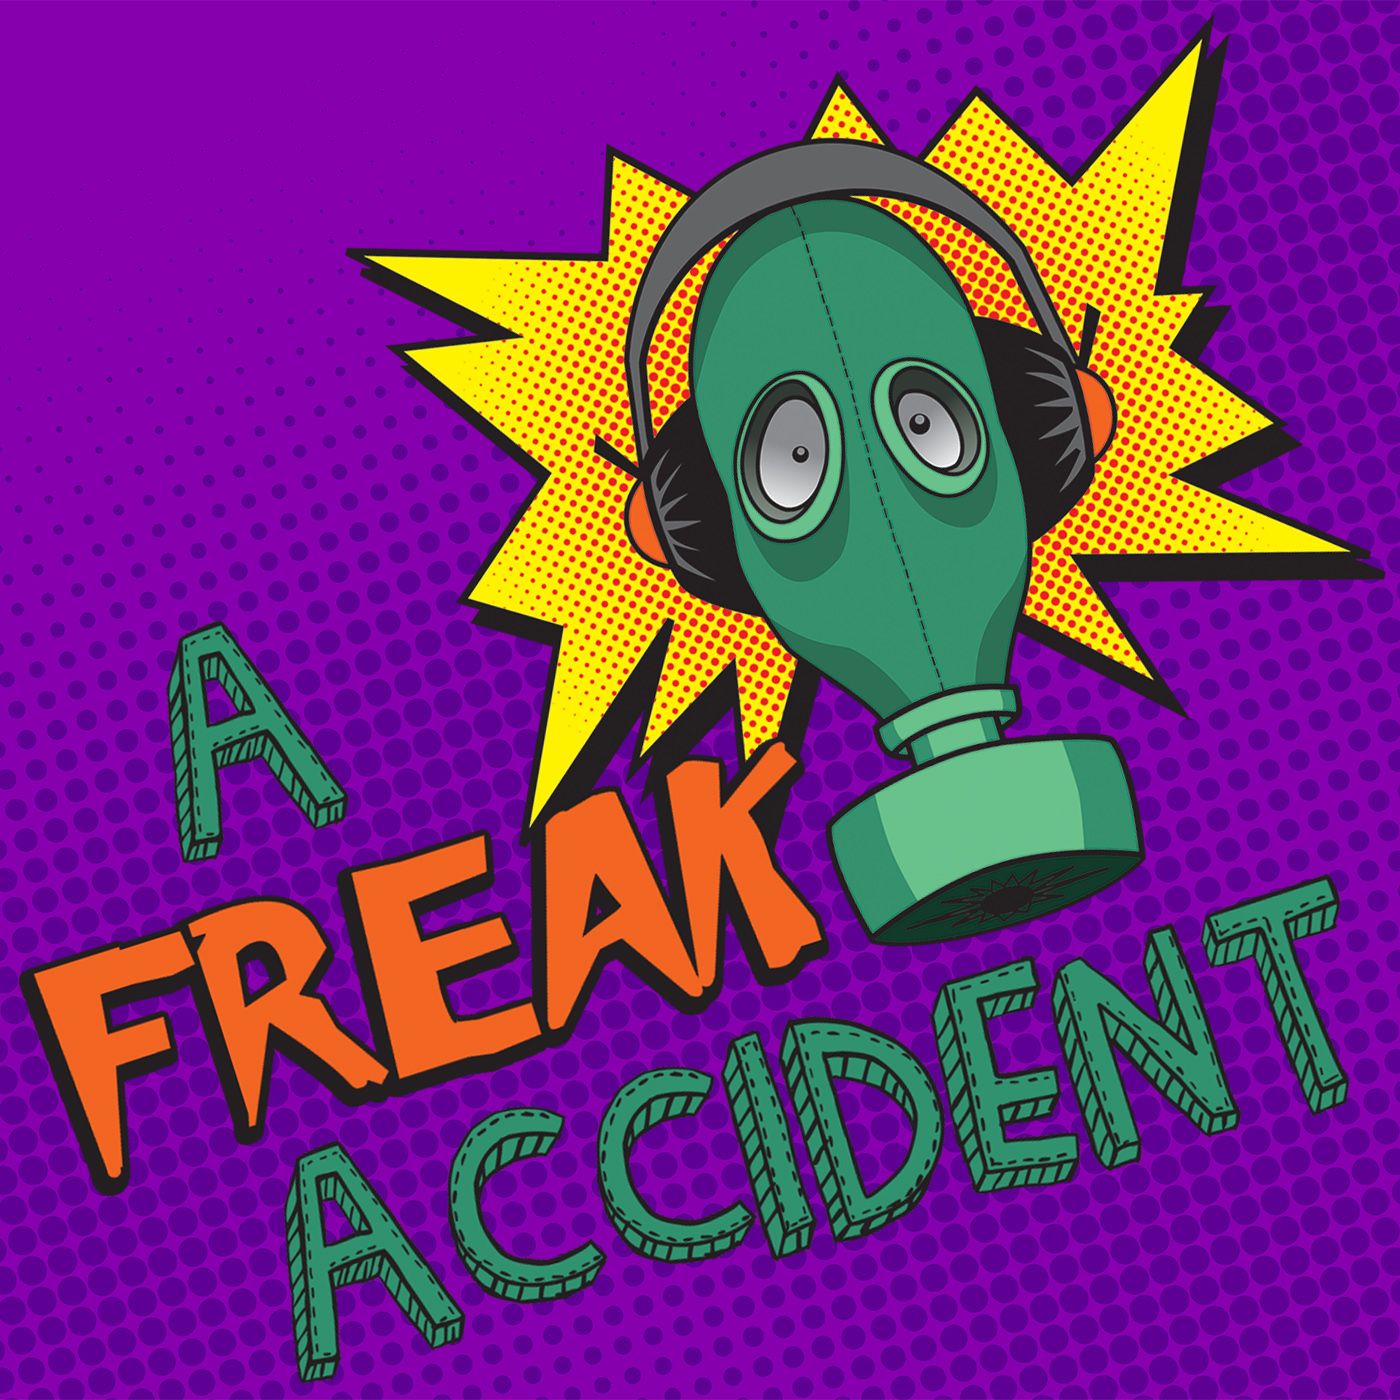 A Freak Accident